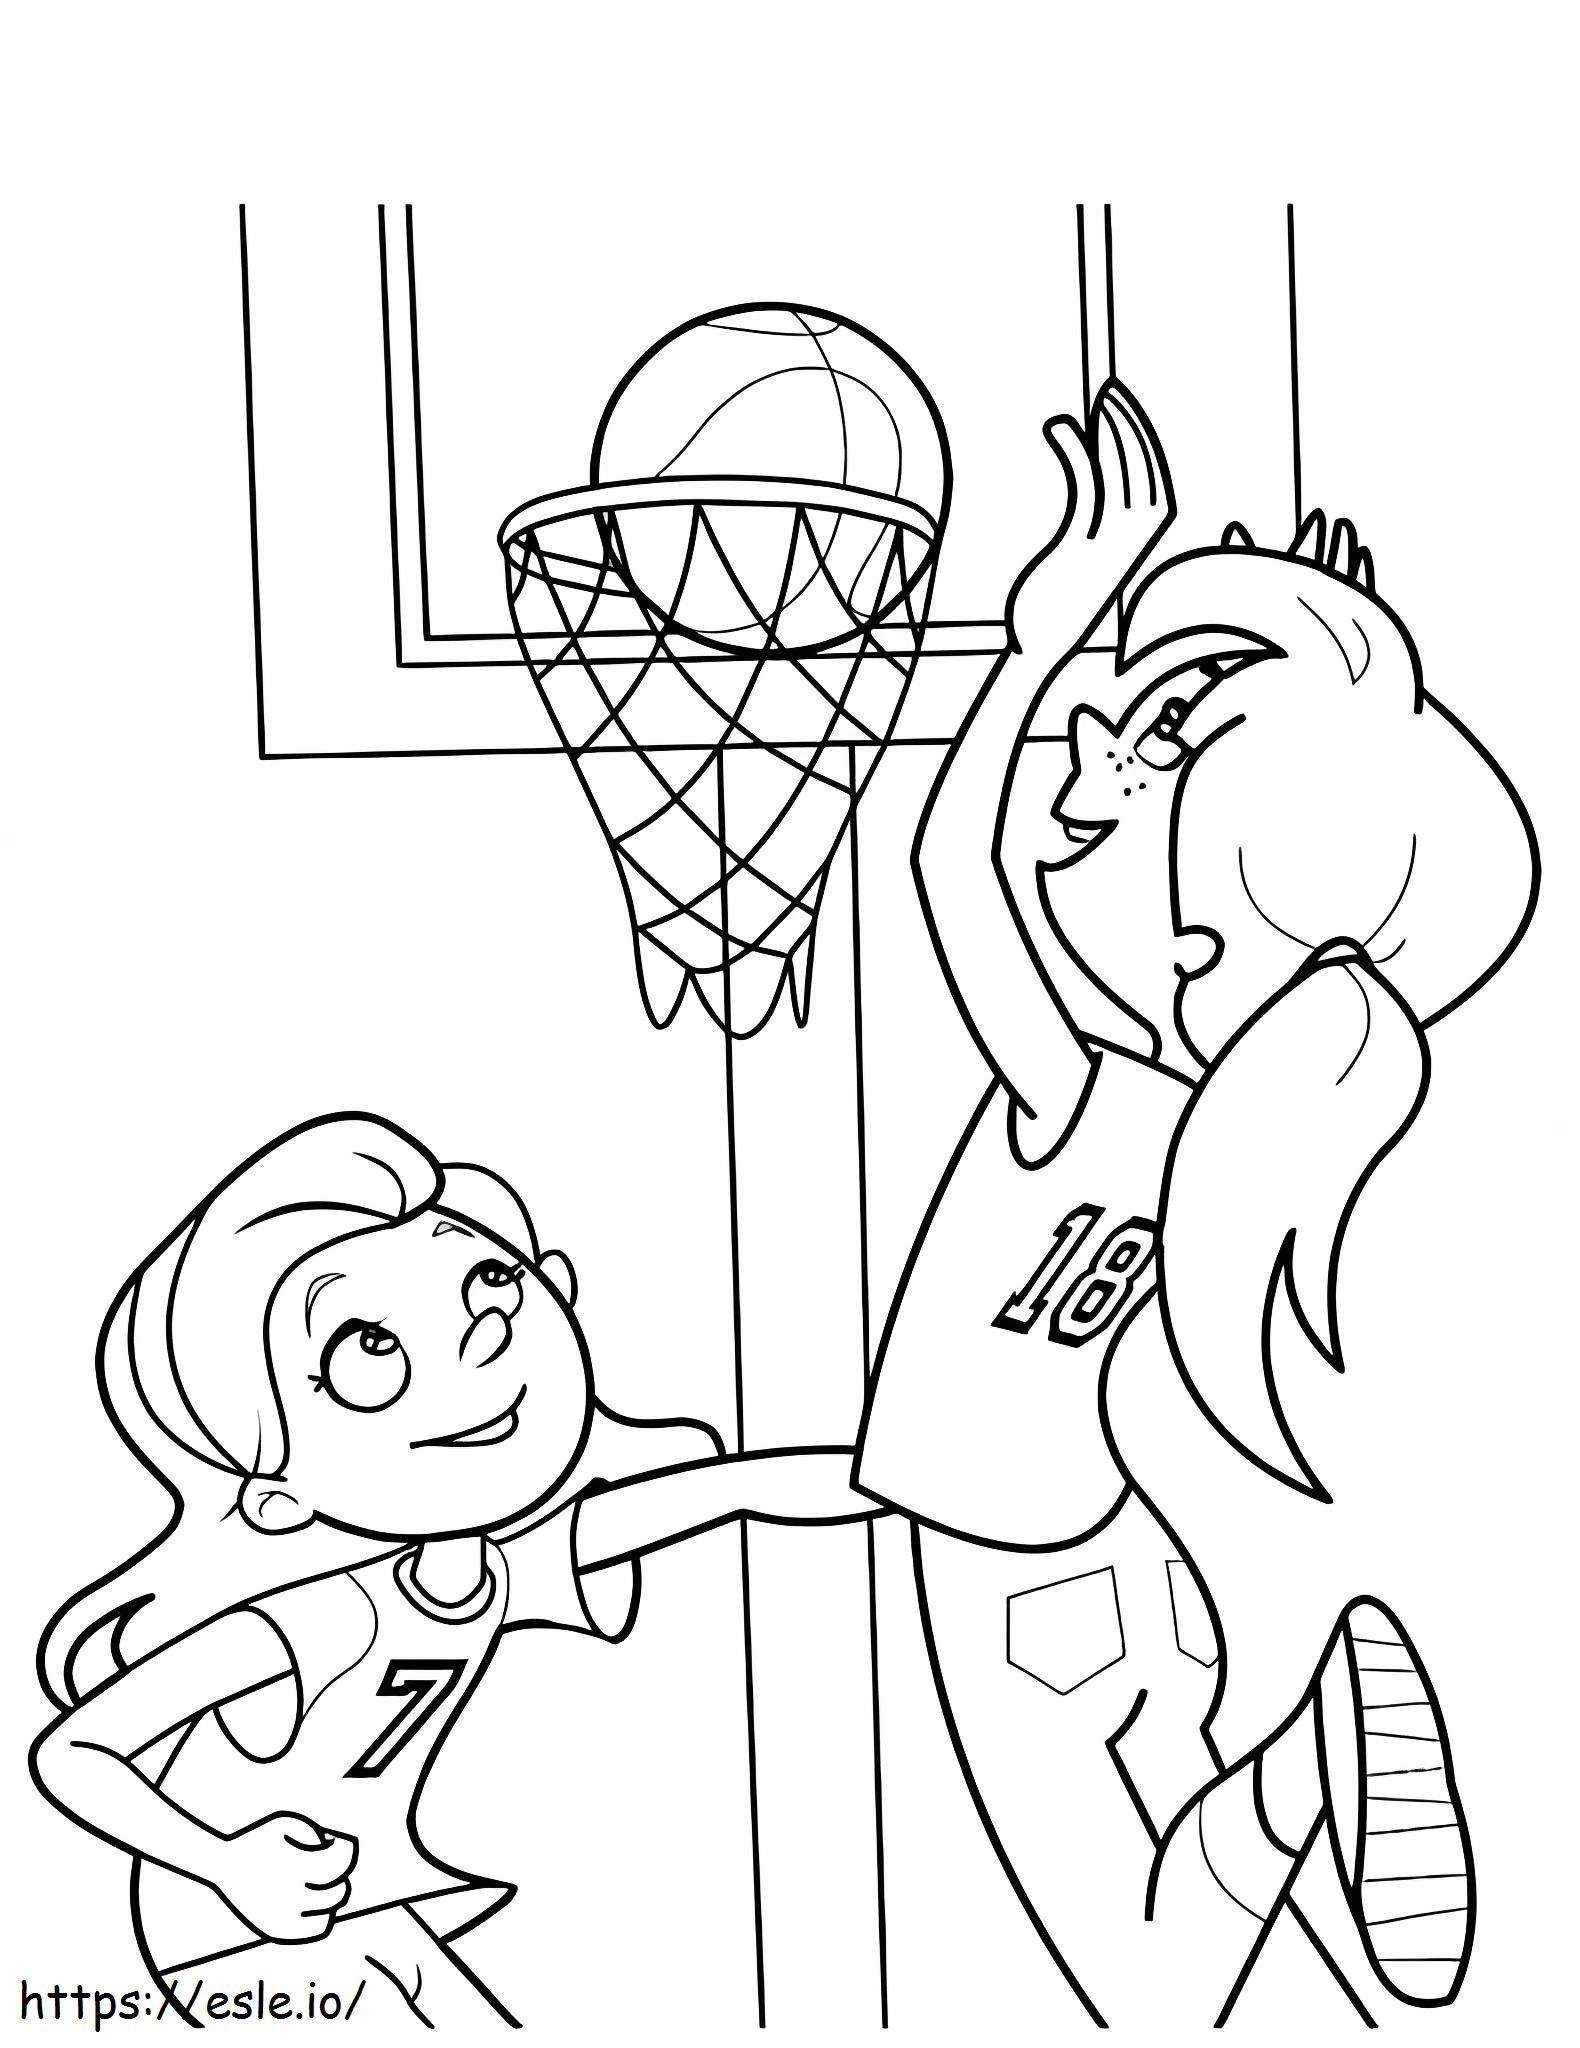 1559609256 meninas jogando basquete A4 para colorir